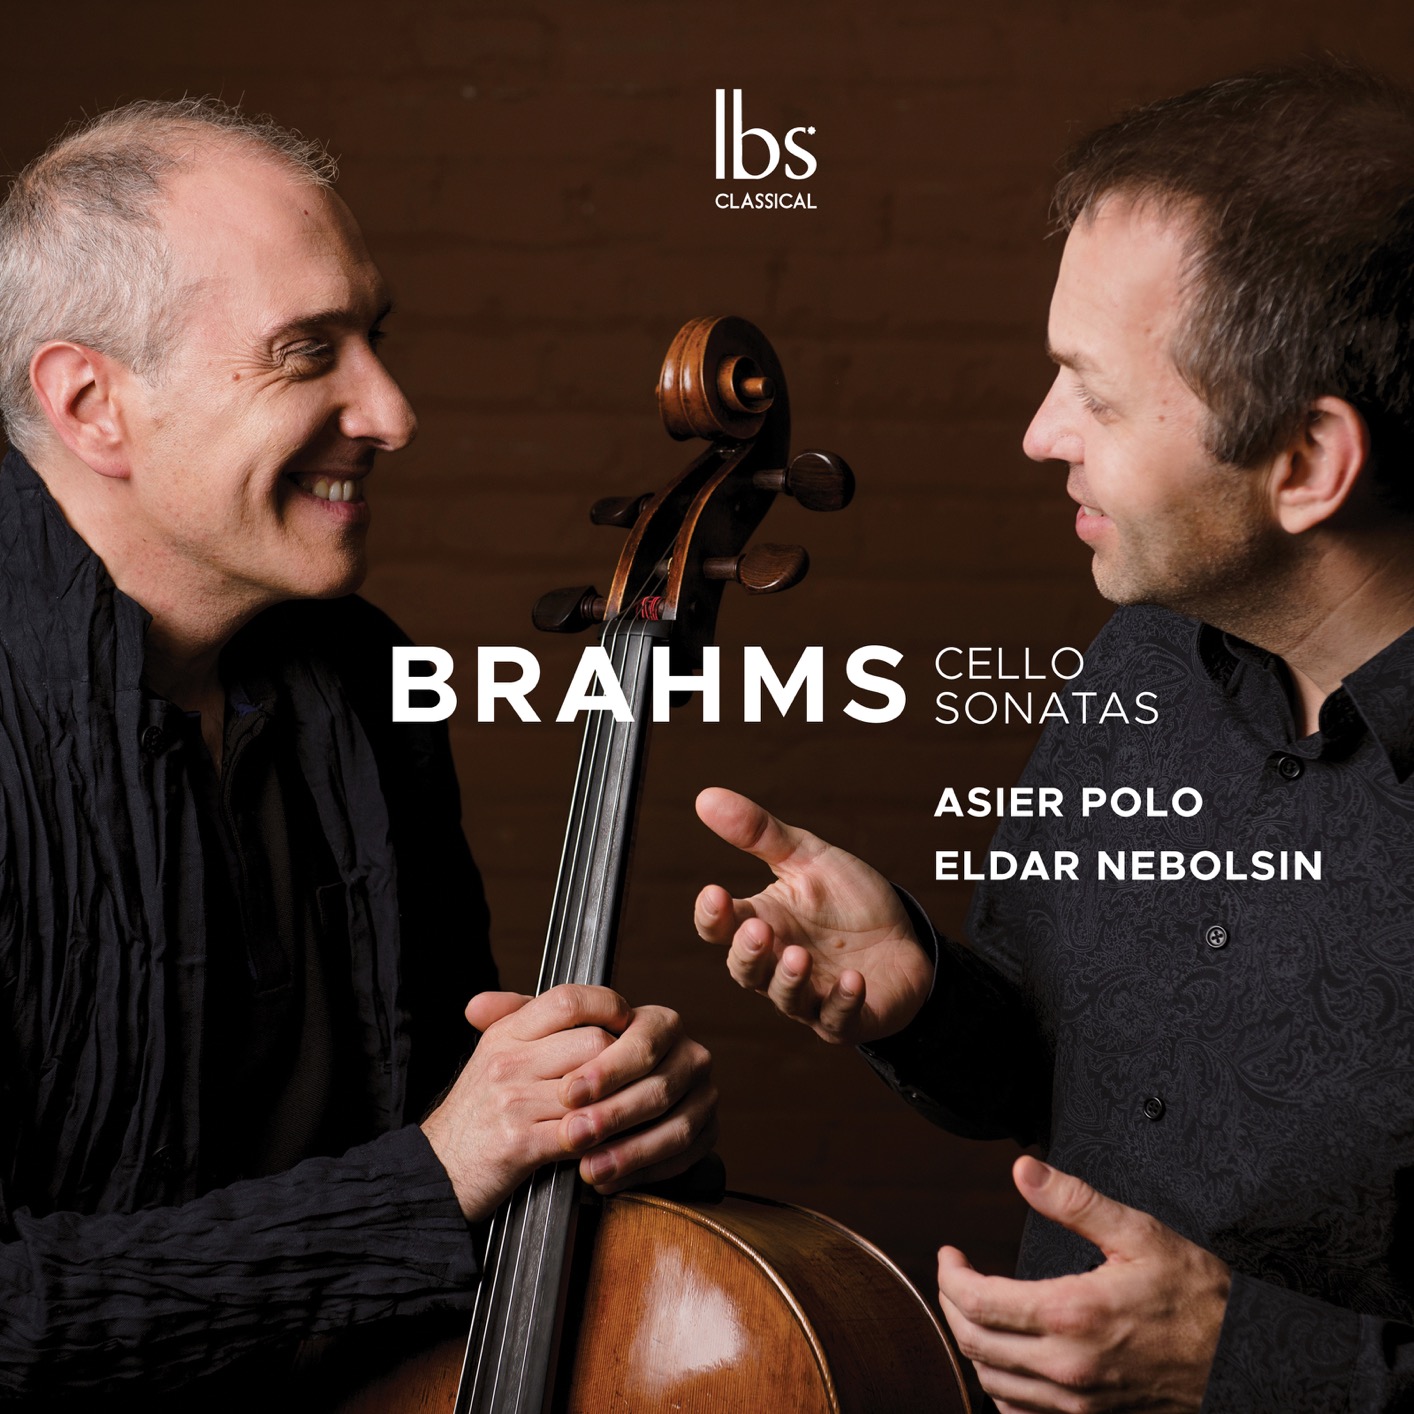 Asier Polo & Eldar Nebolsin - Brahms: Cello Sonatas Nos. 1-2 & Lieder (Arr. for Cello & Piano) (2019) [FLAC 24bit/96kHz]